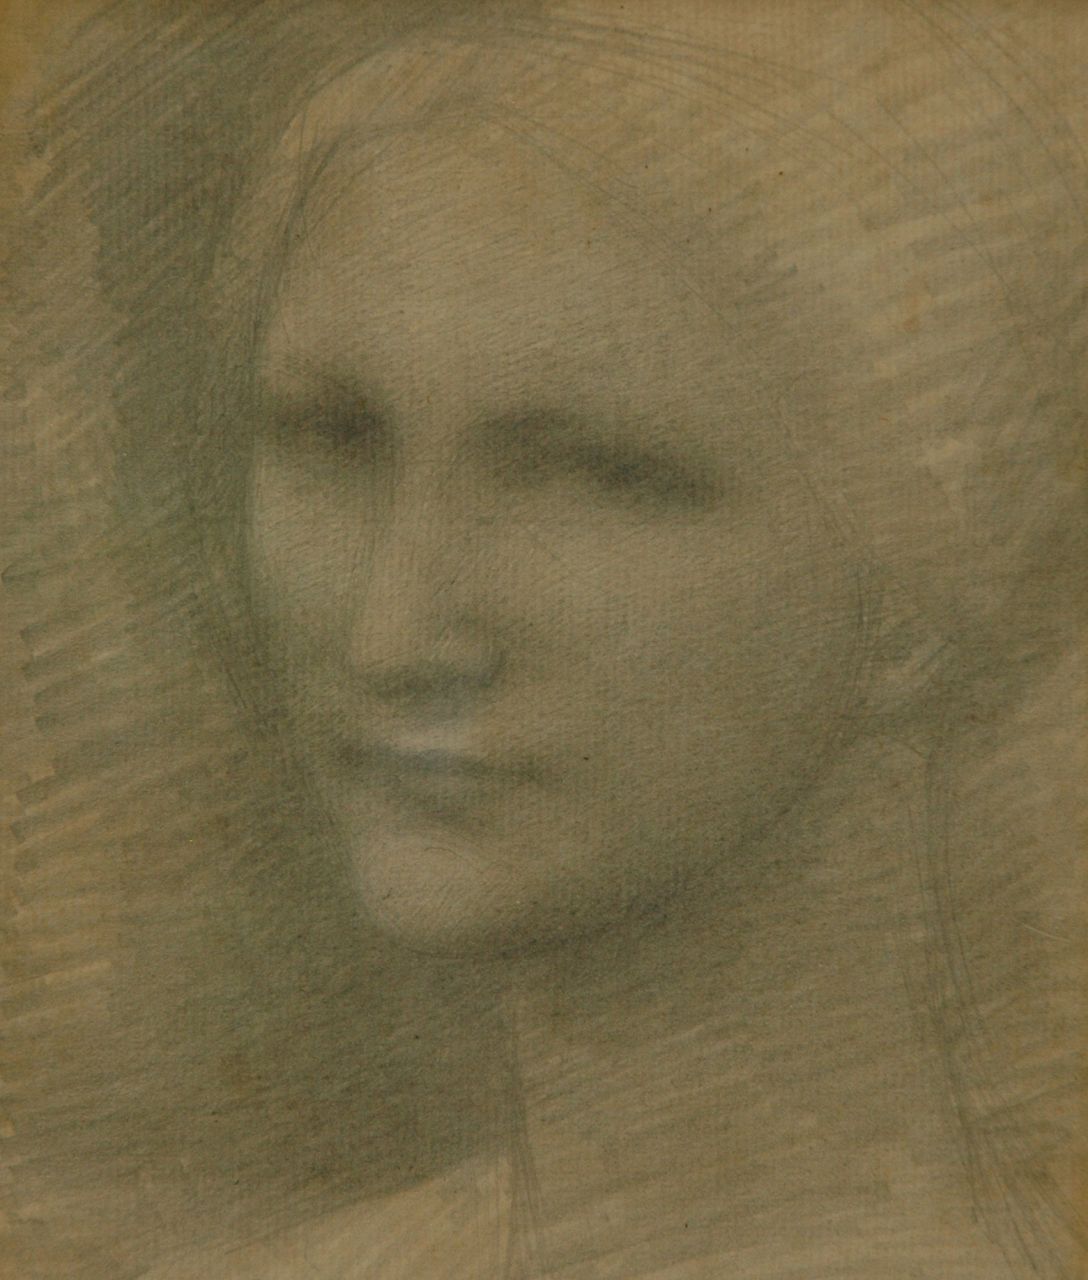 Broeckman A.M.  | Anne Marinus Broeckman, Vrouwenportret, potlood op papier 22,0 x 17,0 cm, gesigneerd rechtsonder met initialen A.M.B.